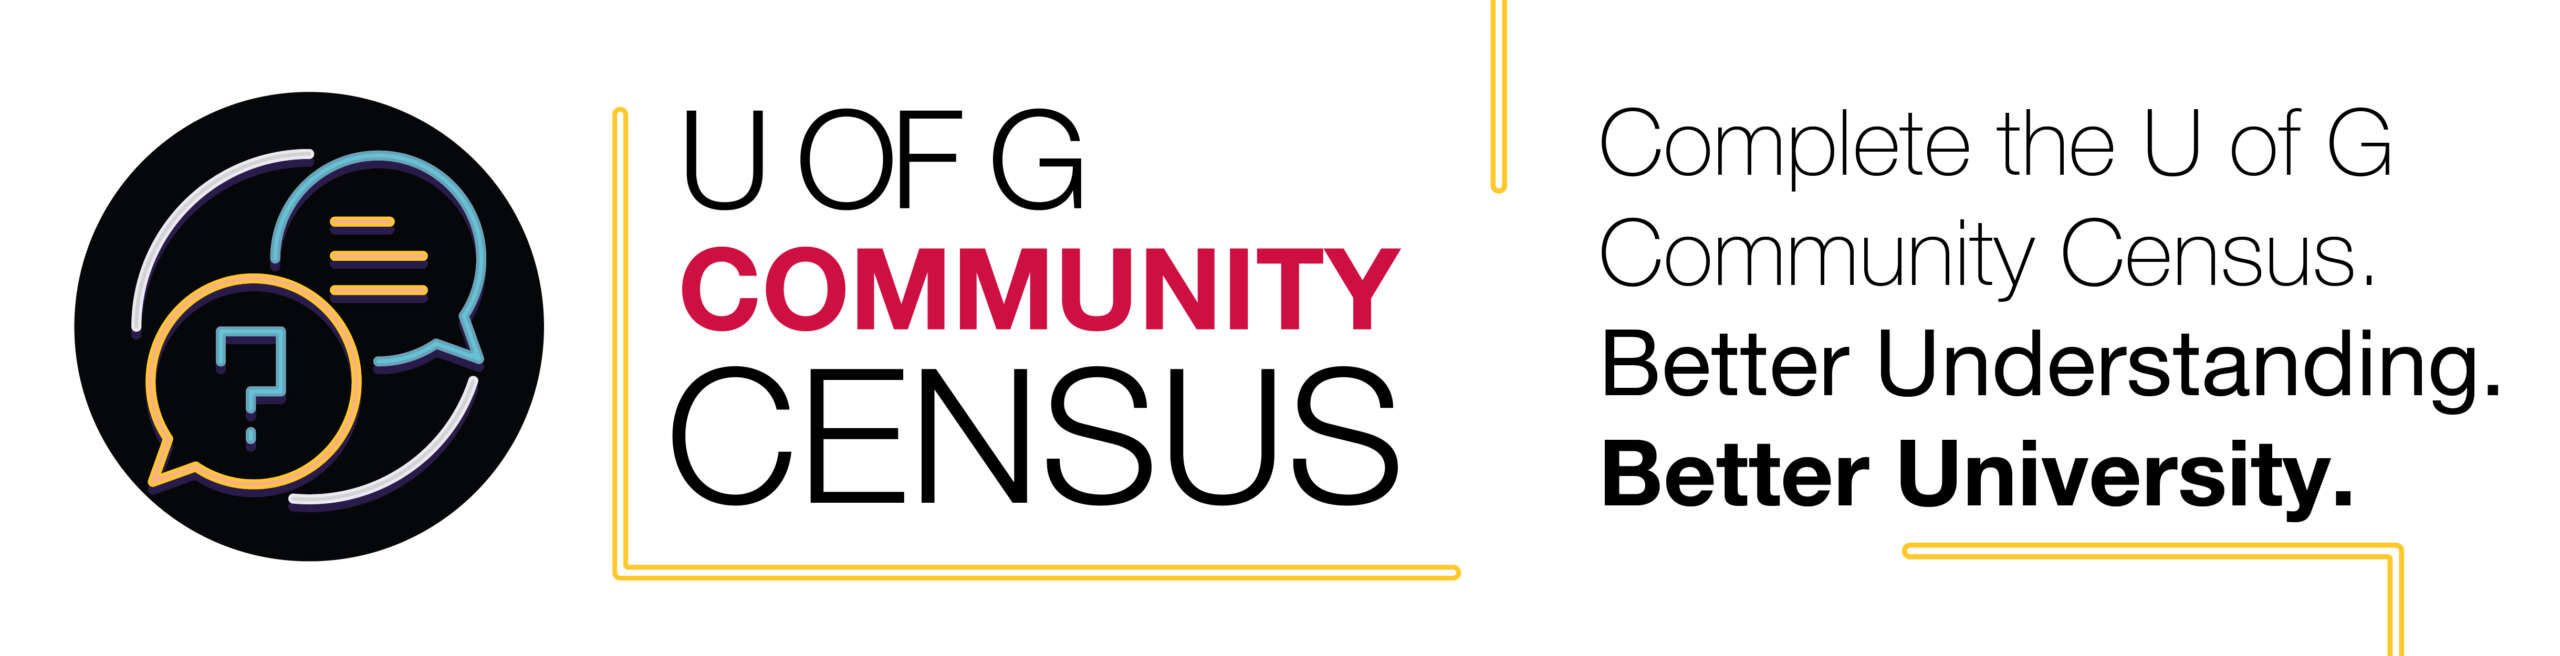 Complete the U of G Community Census. Better Understanding. Better University.